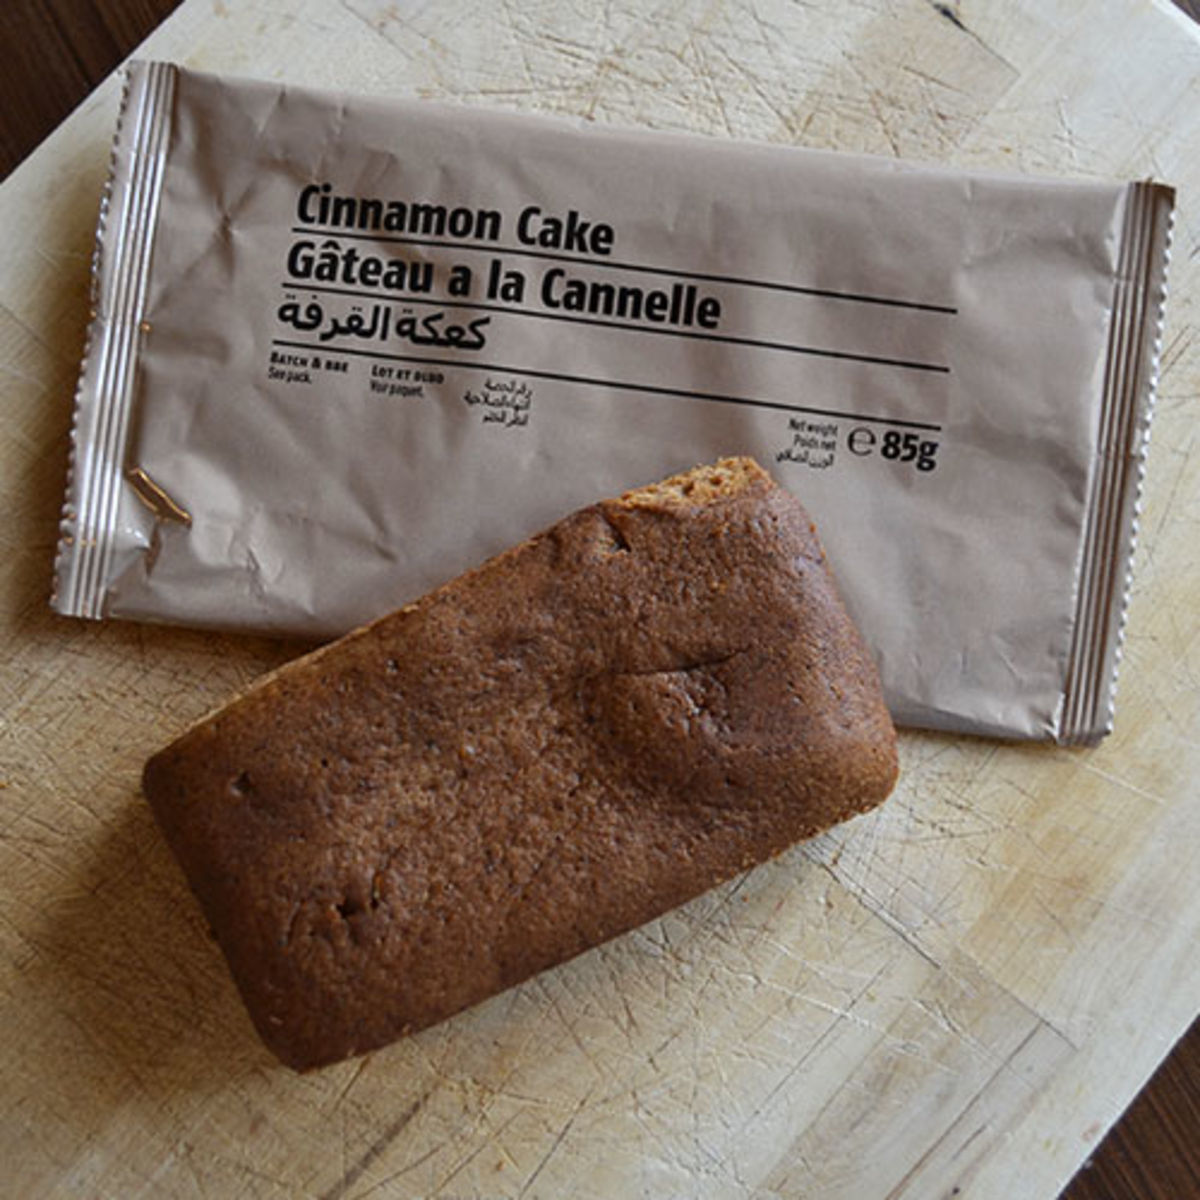 Cinnamon cake